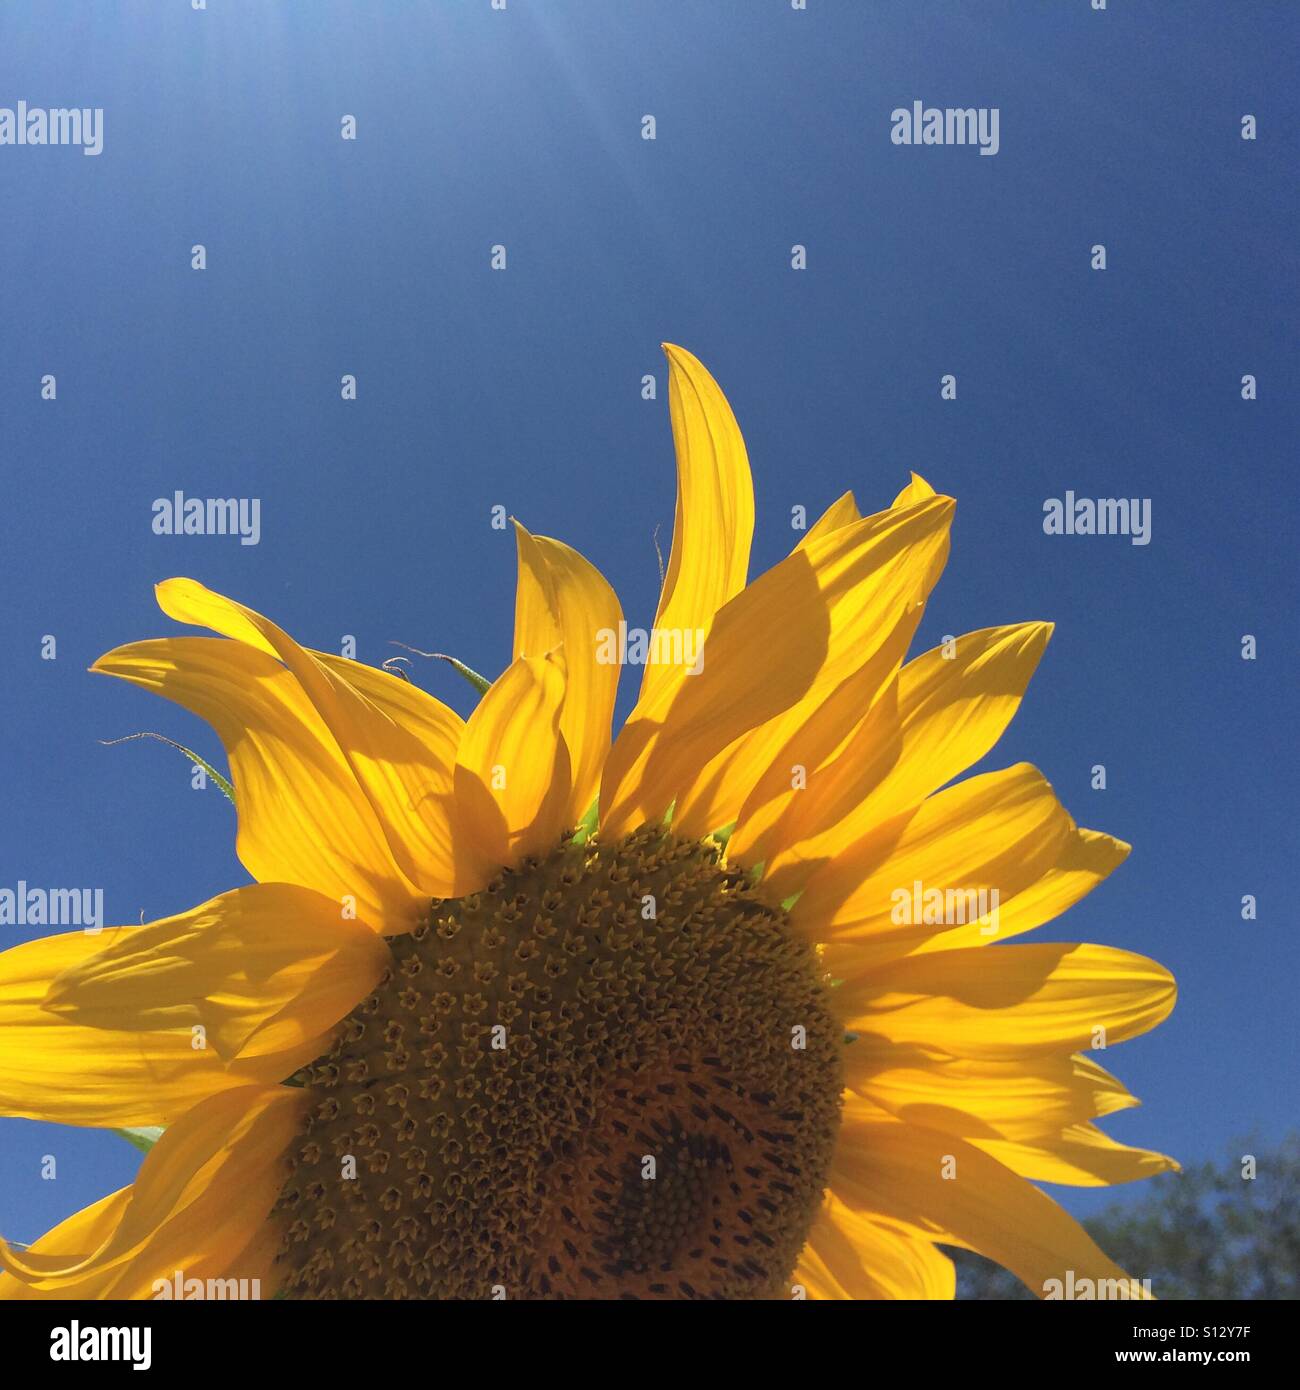 Sunflower in blue sky. Stock Photo